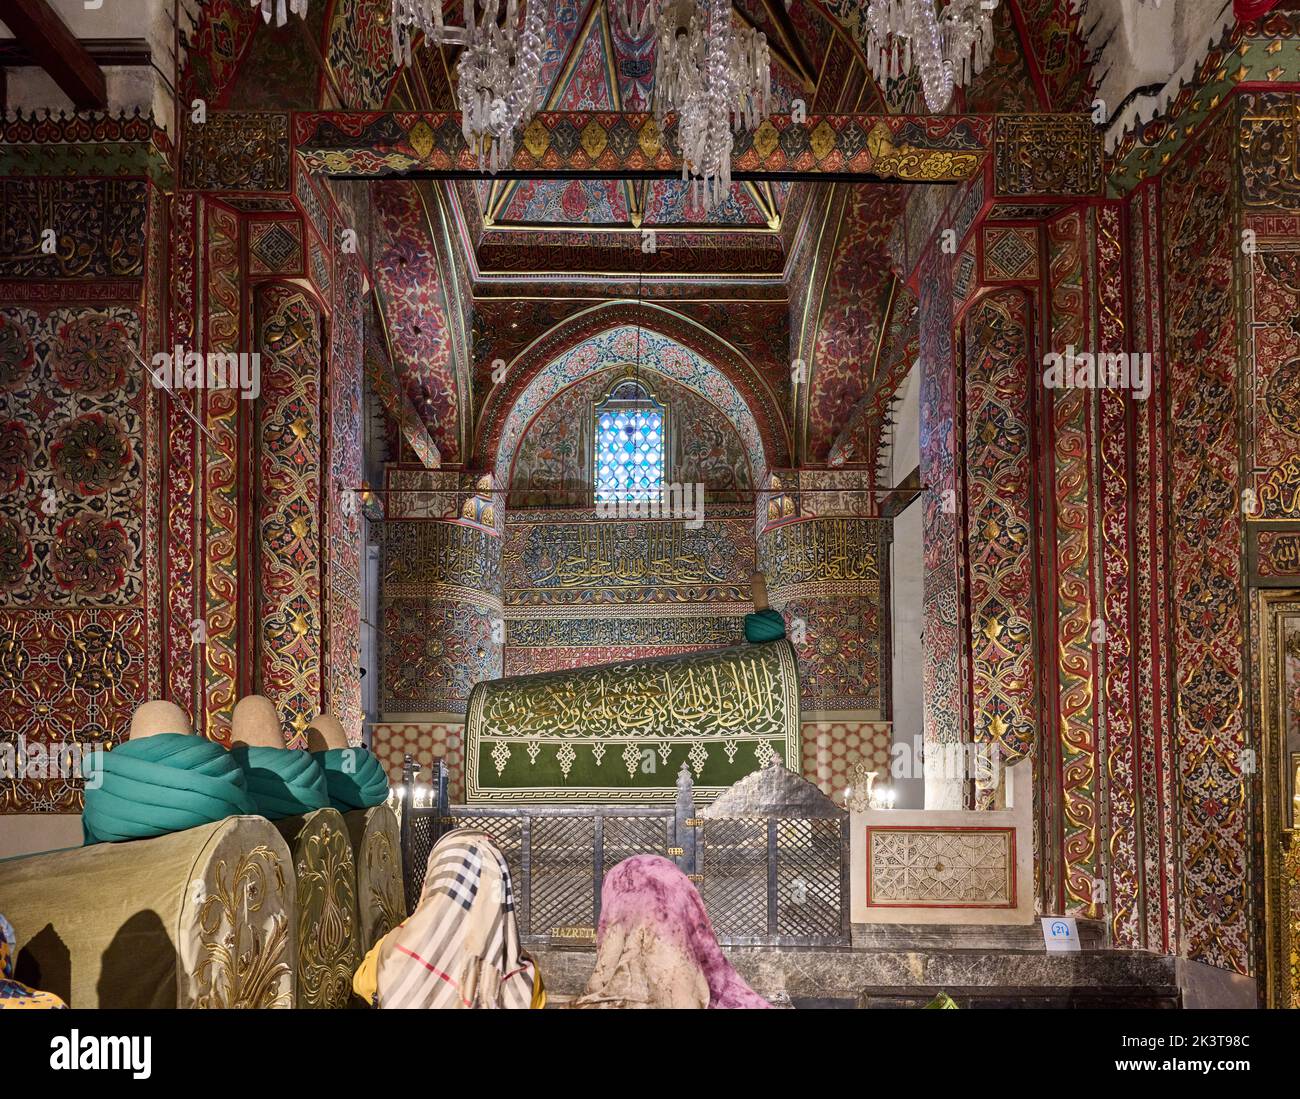 Innenaufnahme des Mausoleum und Museum des Mevlana Rumi, Hazreti Mevlana, Konya, Tuerkei    |inside shot of Mausoleum and museum of Mevlana Rumi, Hazr Stock Photo